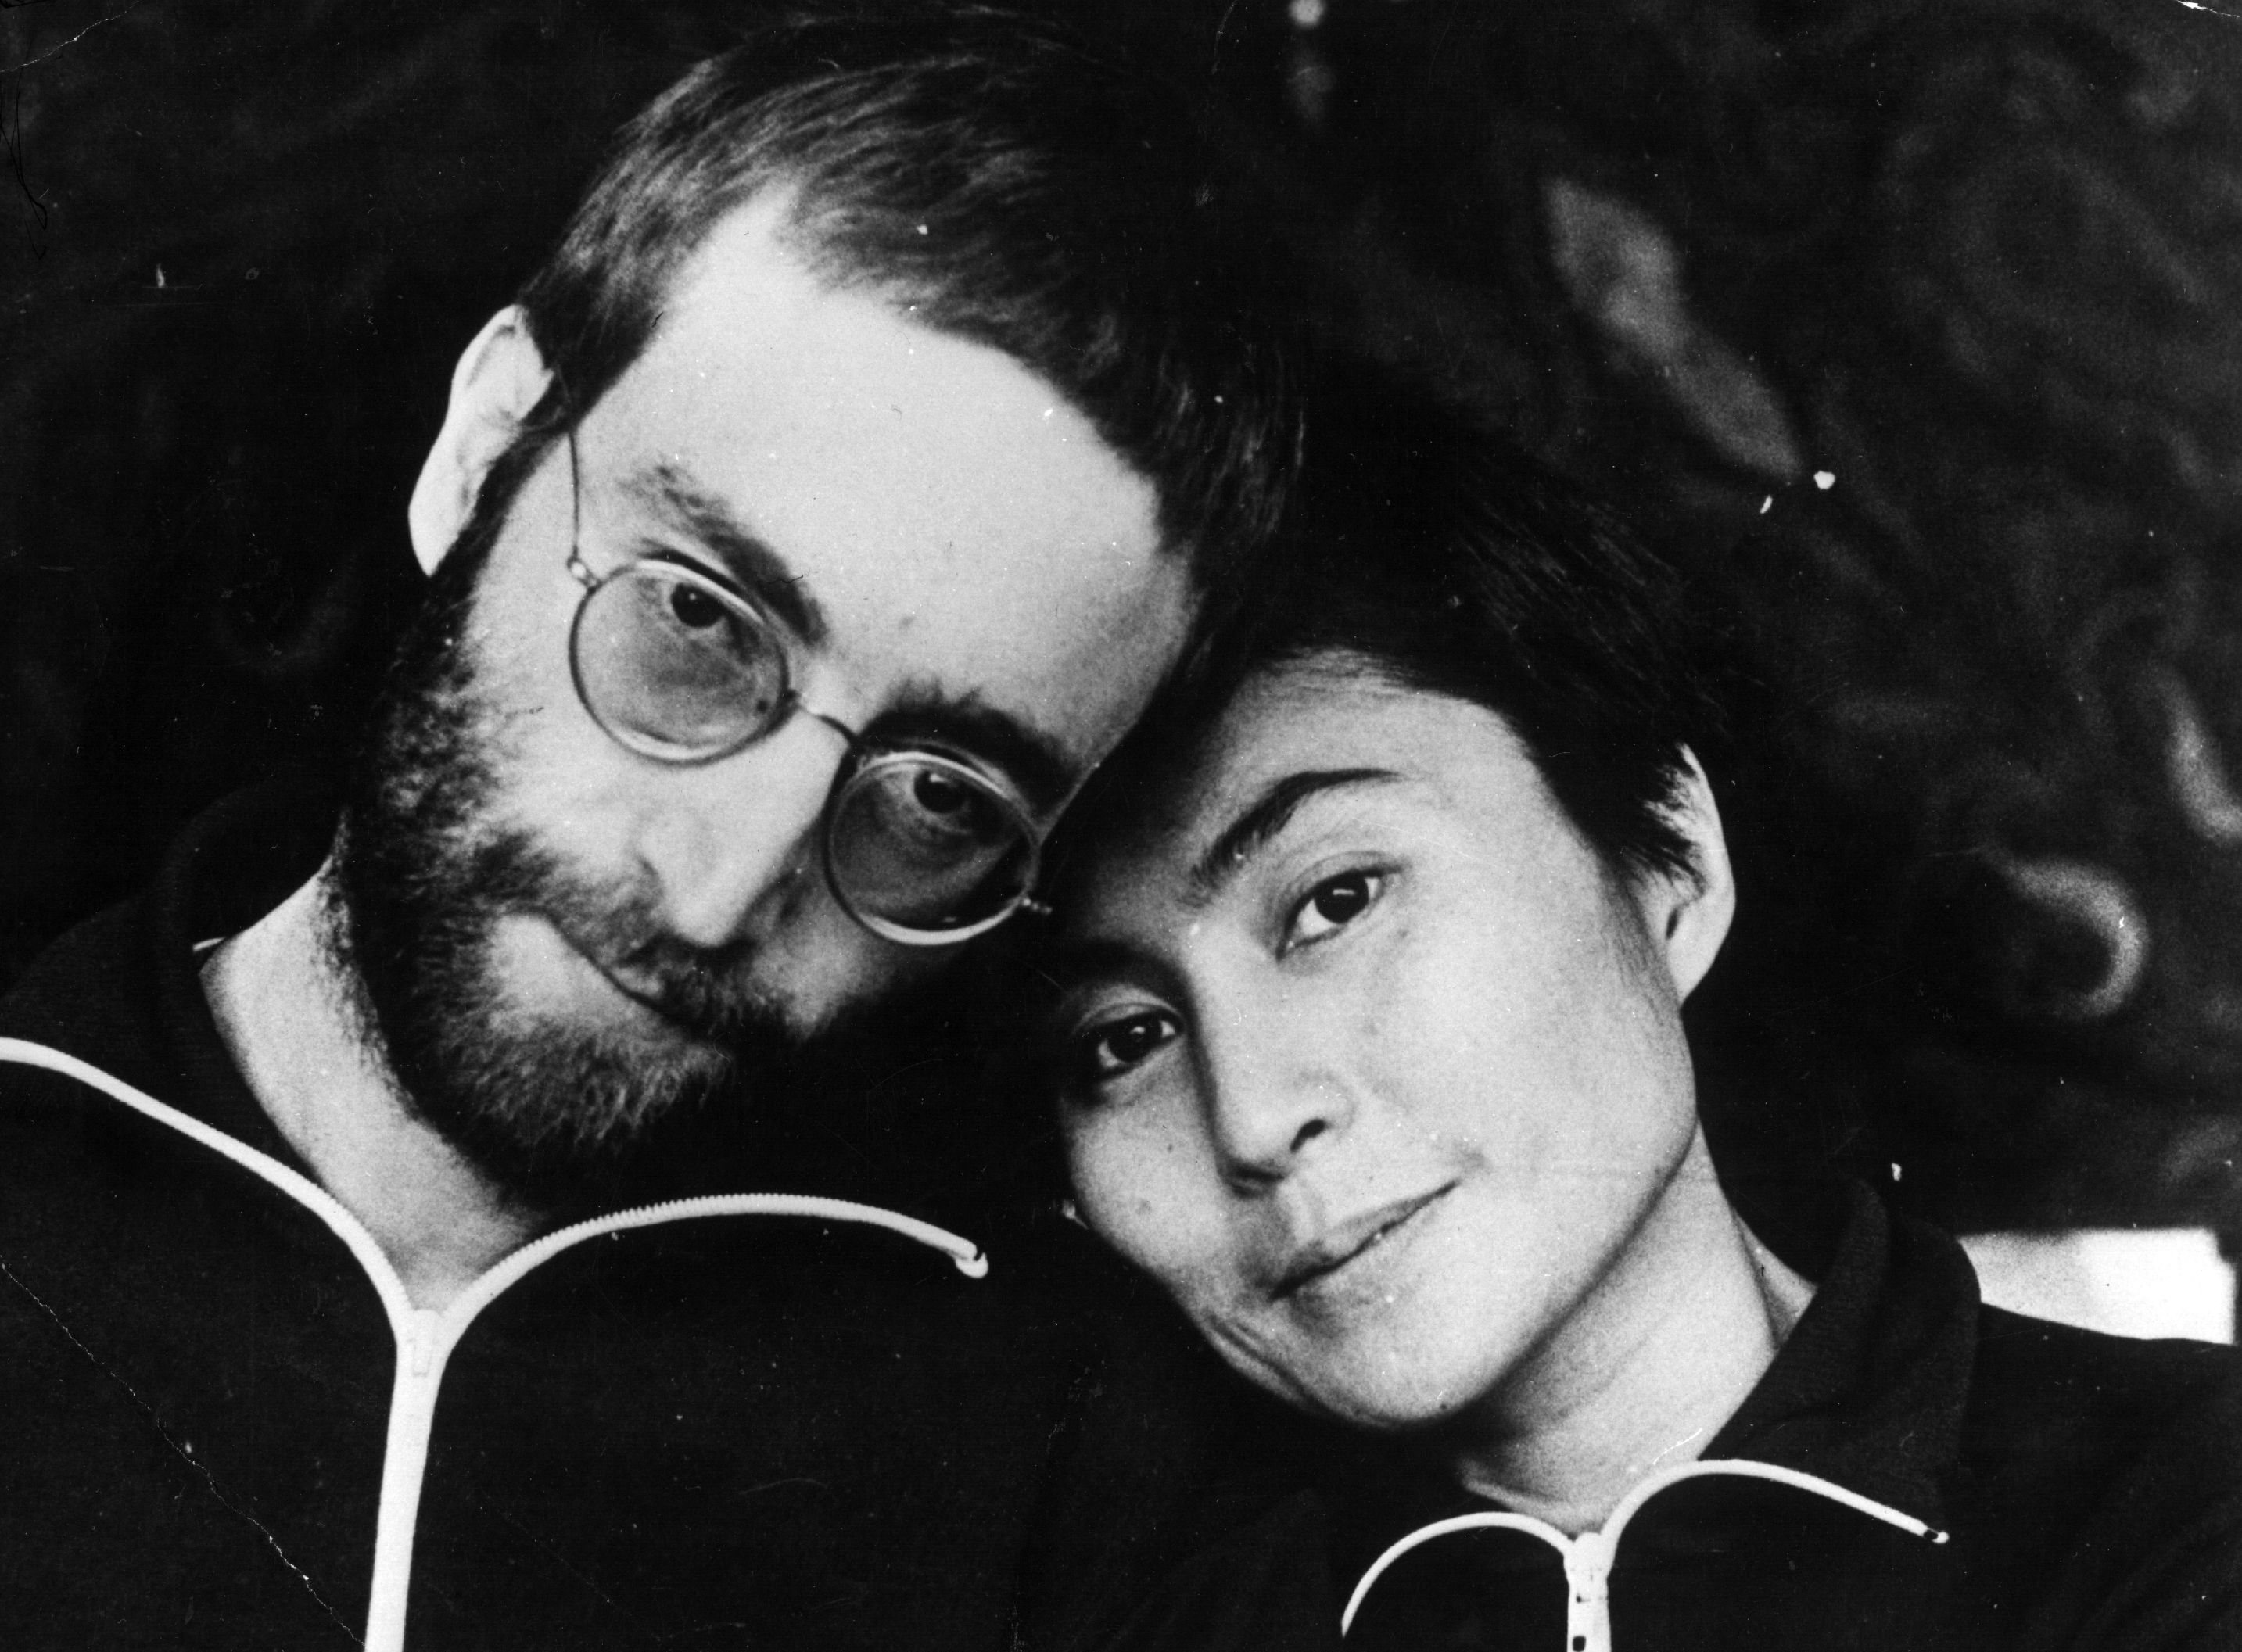 John Lennon and Yoko Ono in black-and-white